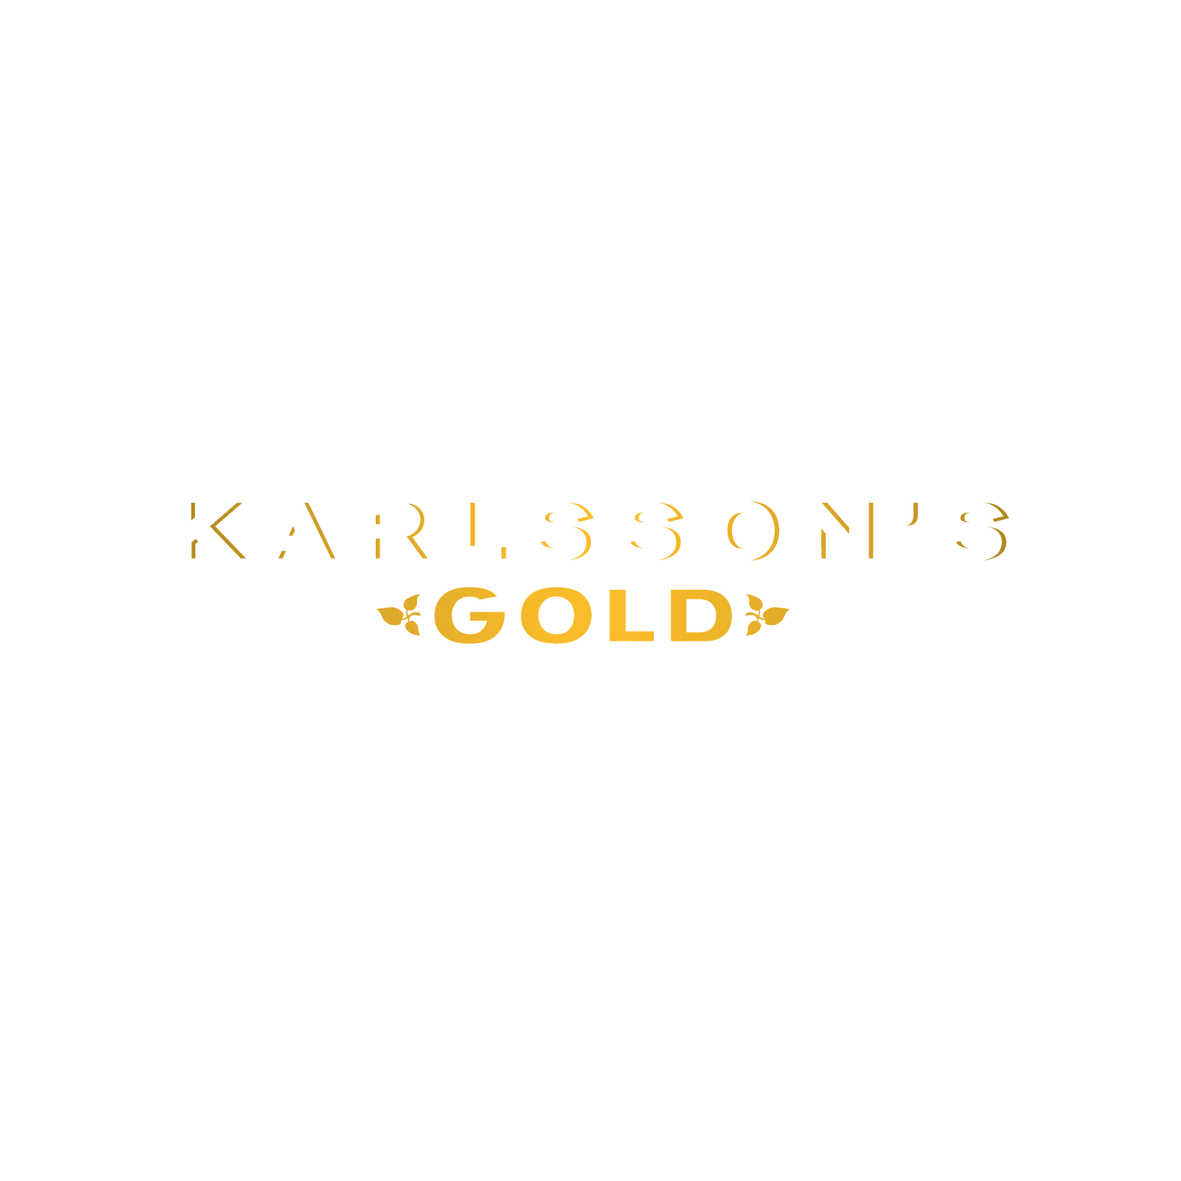 new_logo_KARLSSONS